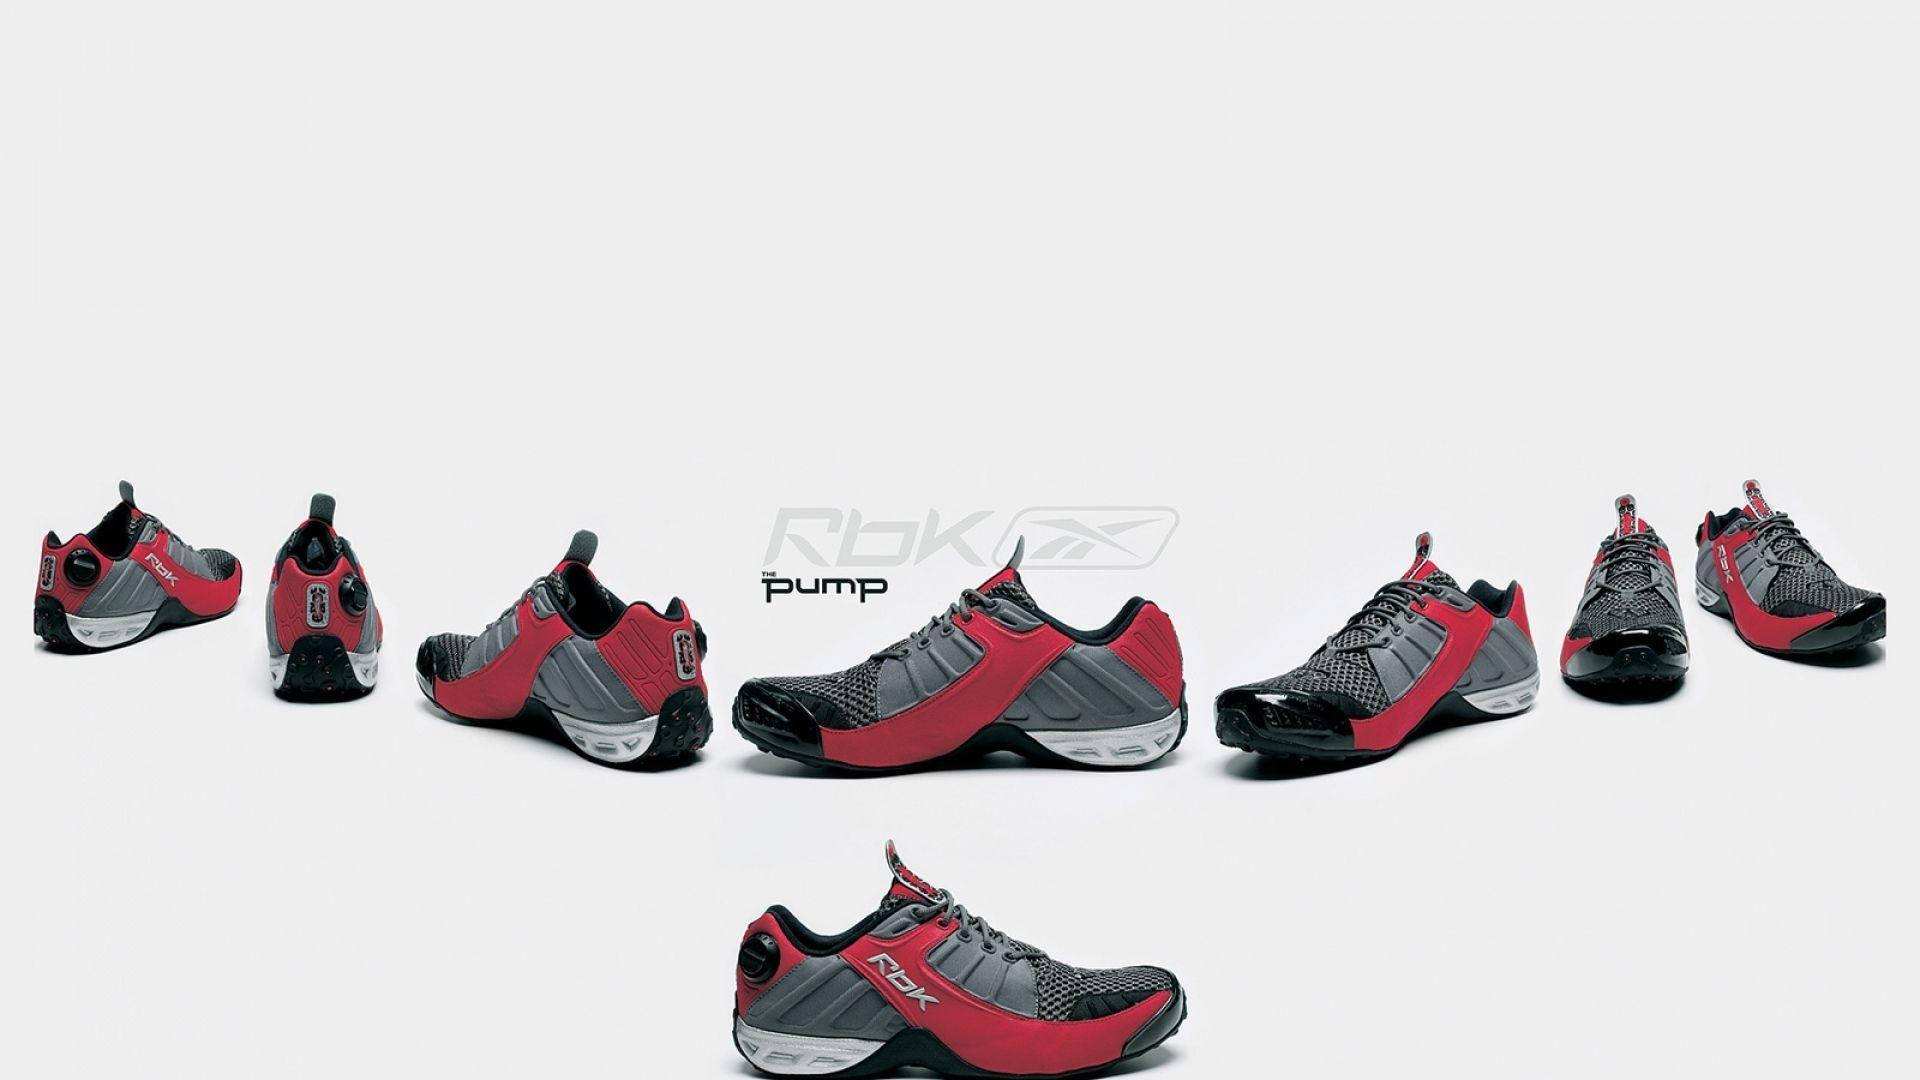 Reebok Pump Shoes Design Background